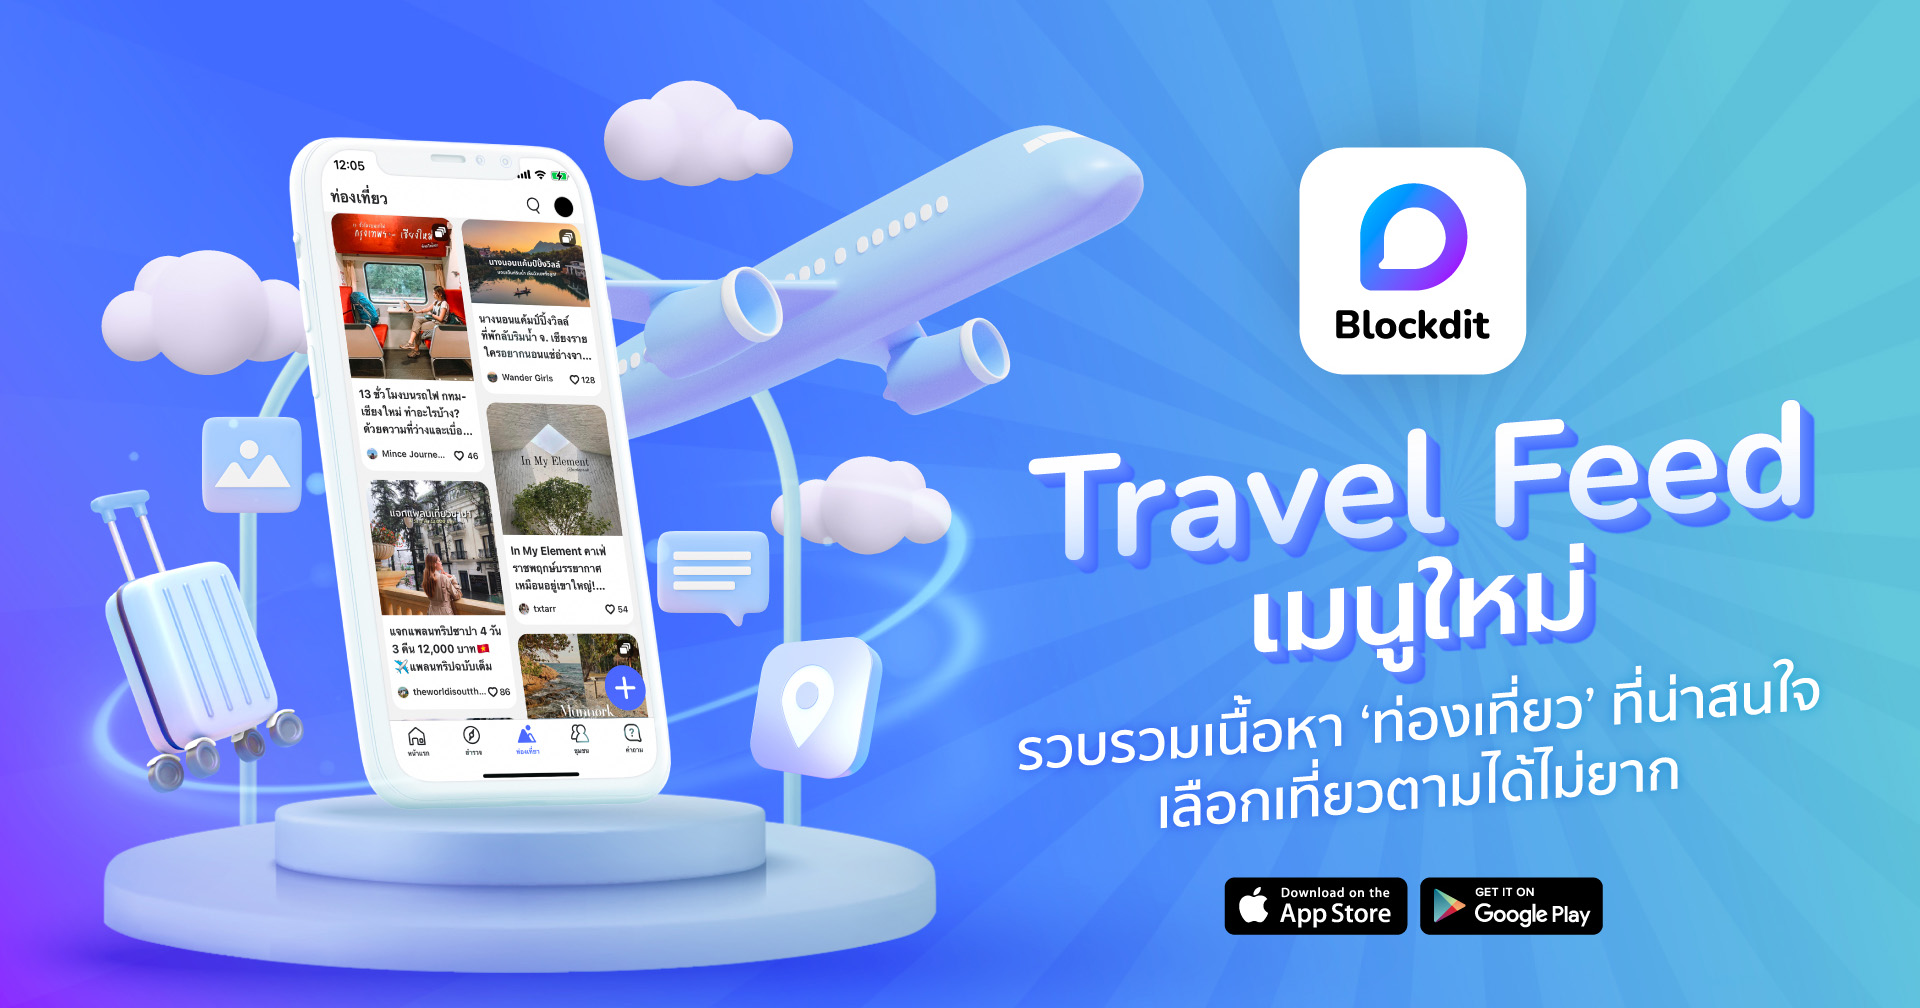 Blockdit เปิดตัว “Travel Feed” ฟีเจอร์ใหม่สำหรับคนรักการเดินทาง ตั้งเป้ายอดผู้ใช้งานบนแพลตฟอร์มโตขึ้น 100% ภายในปีนี้